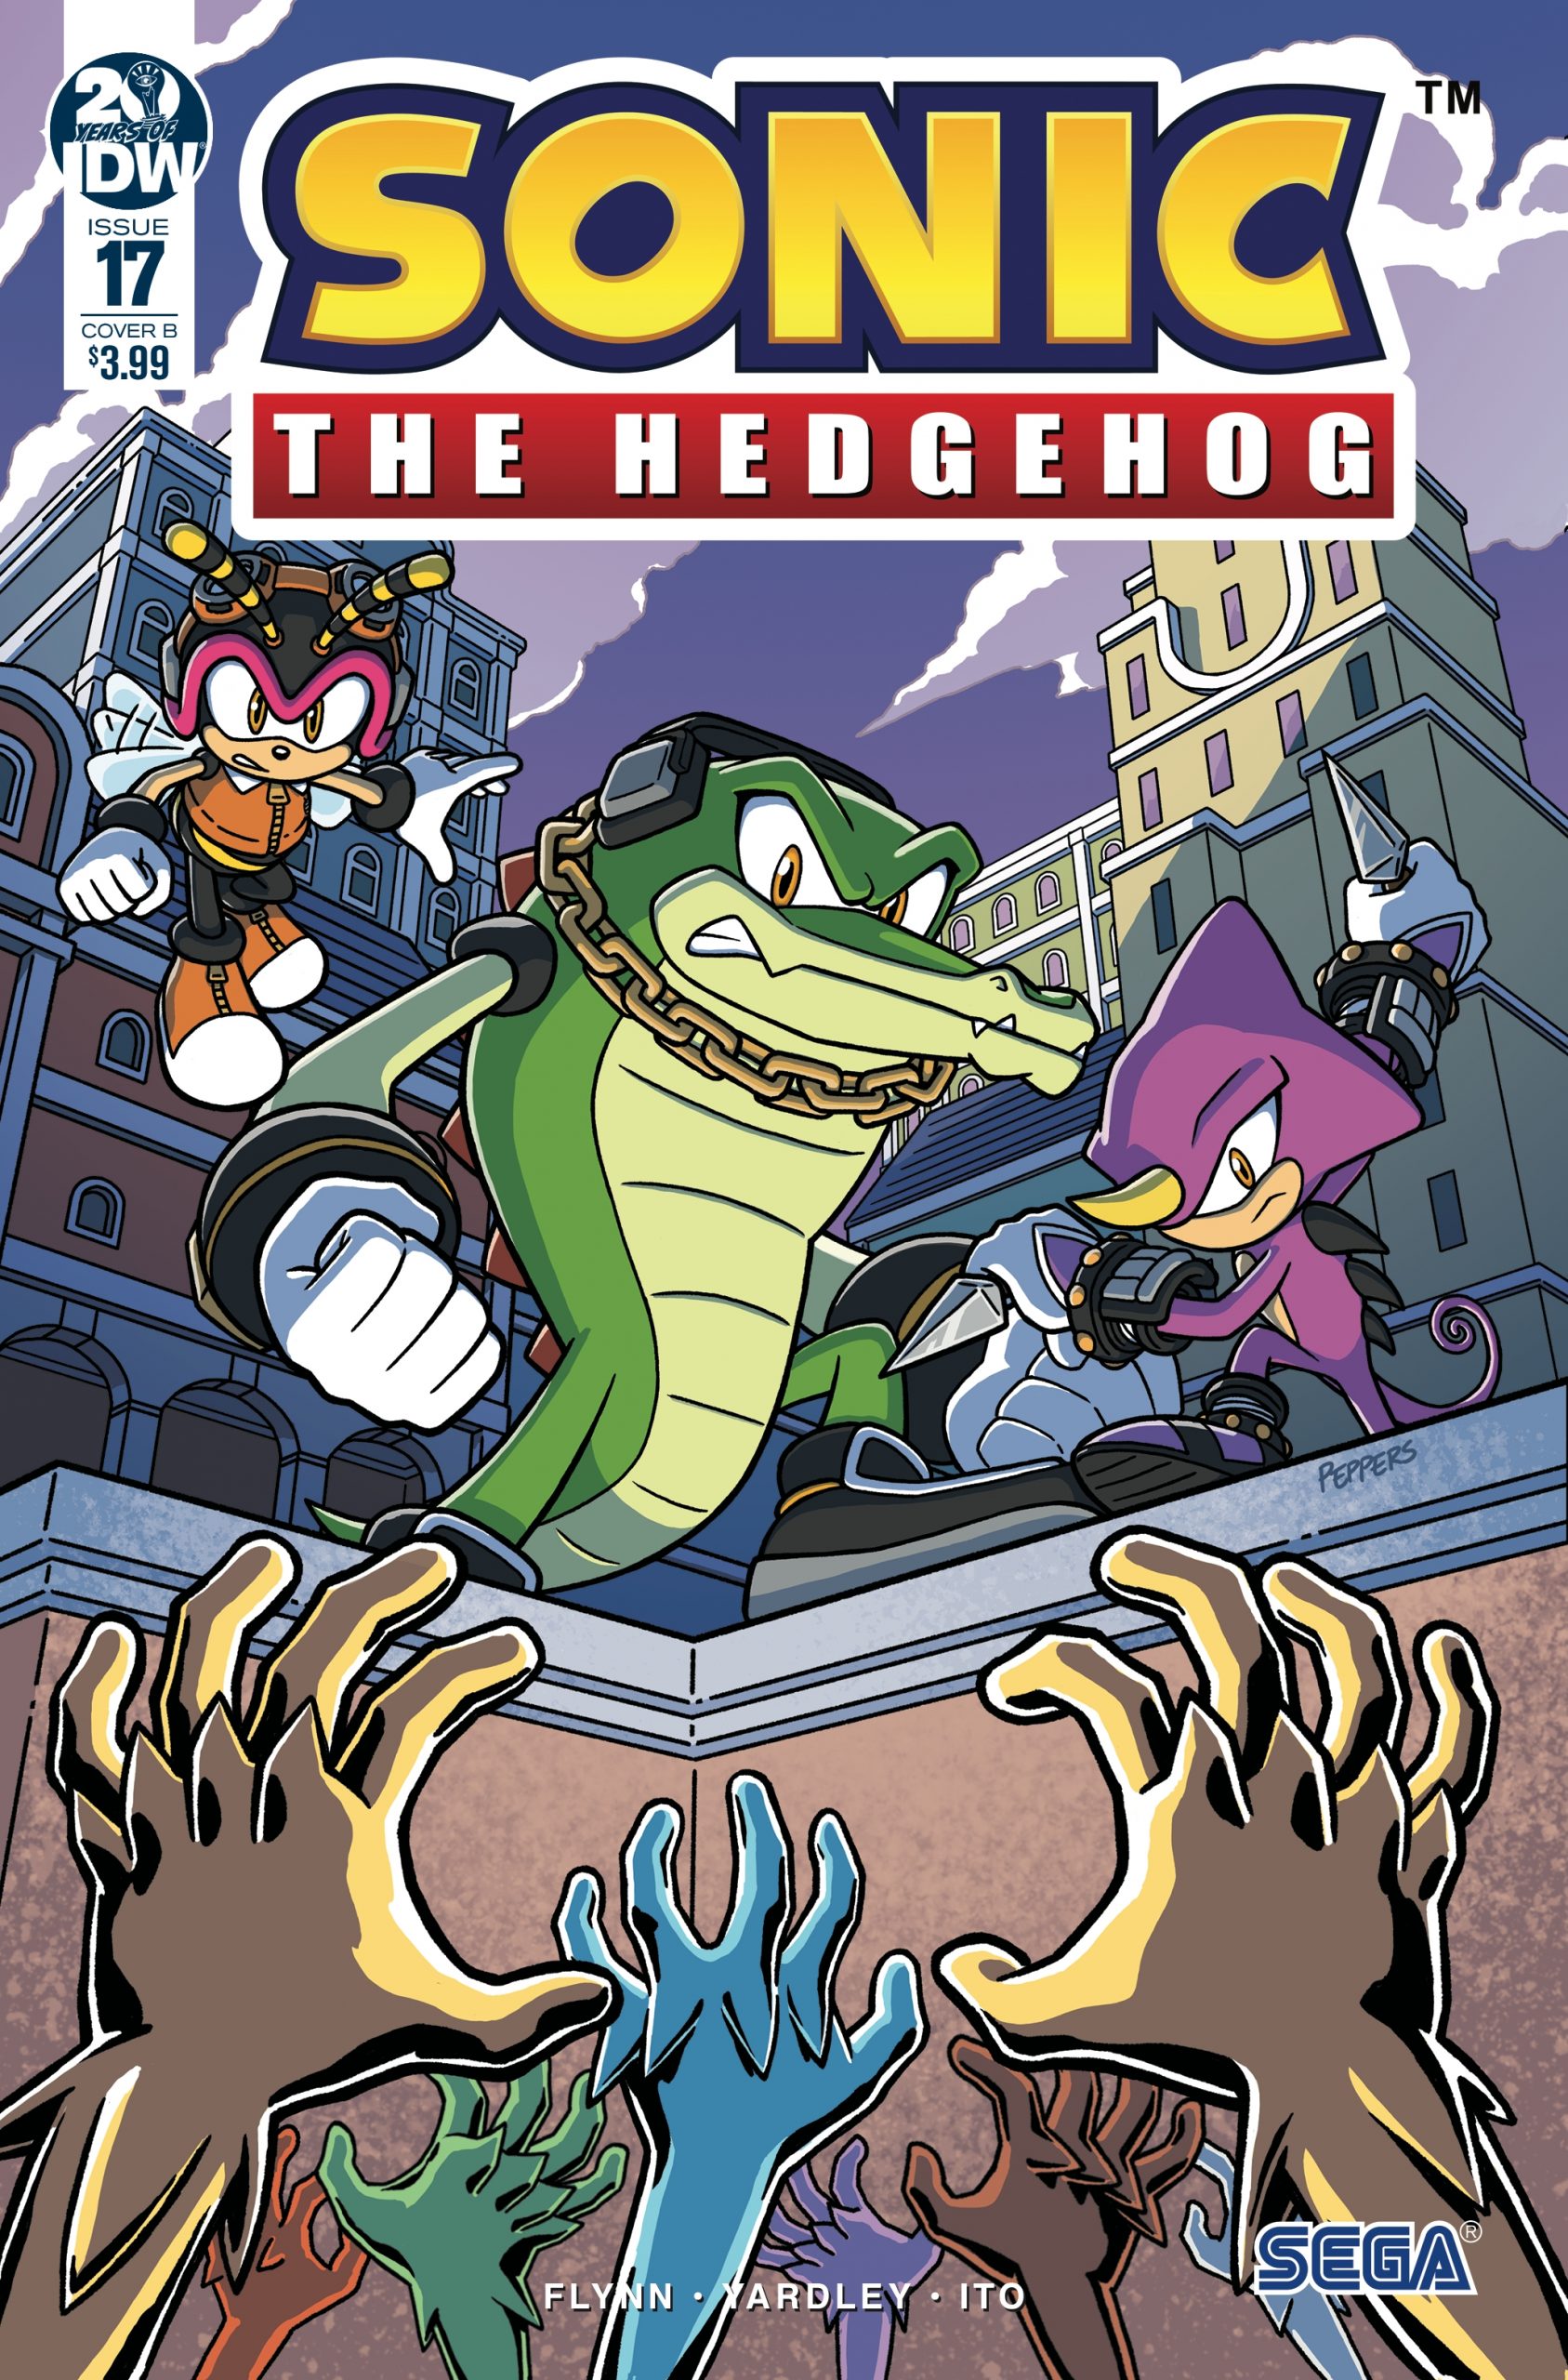 Sonic The Hedgehog #17 Cover B